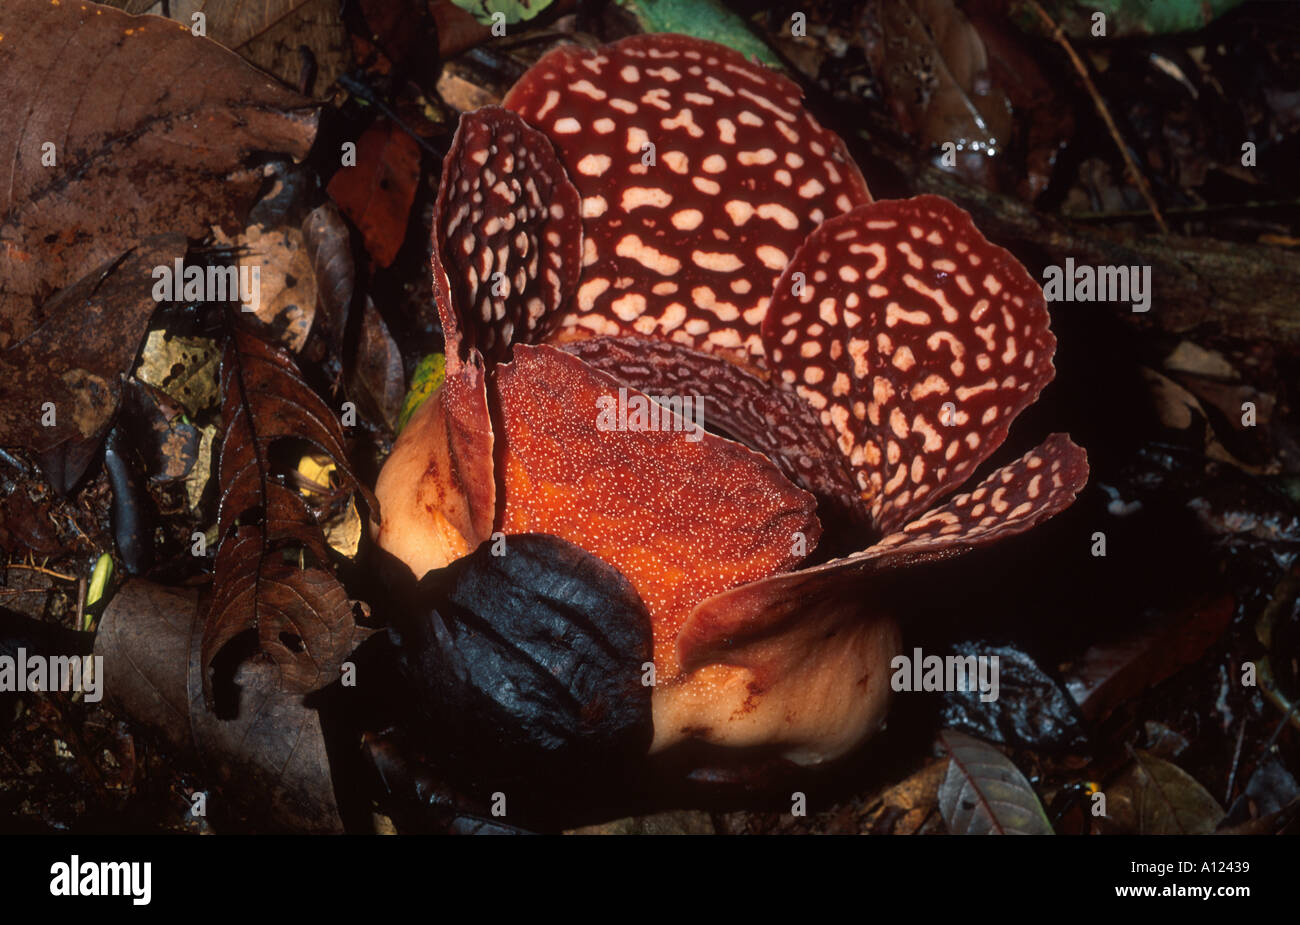 The world s largest flower Rafflesia pricei opening. The world s largest flower Rafflesia pricei opening Stock Photo